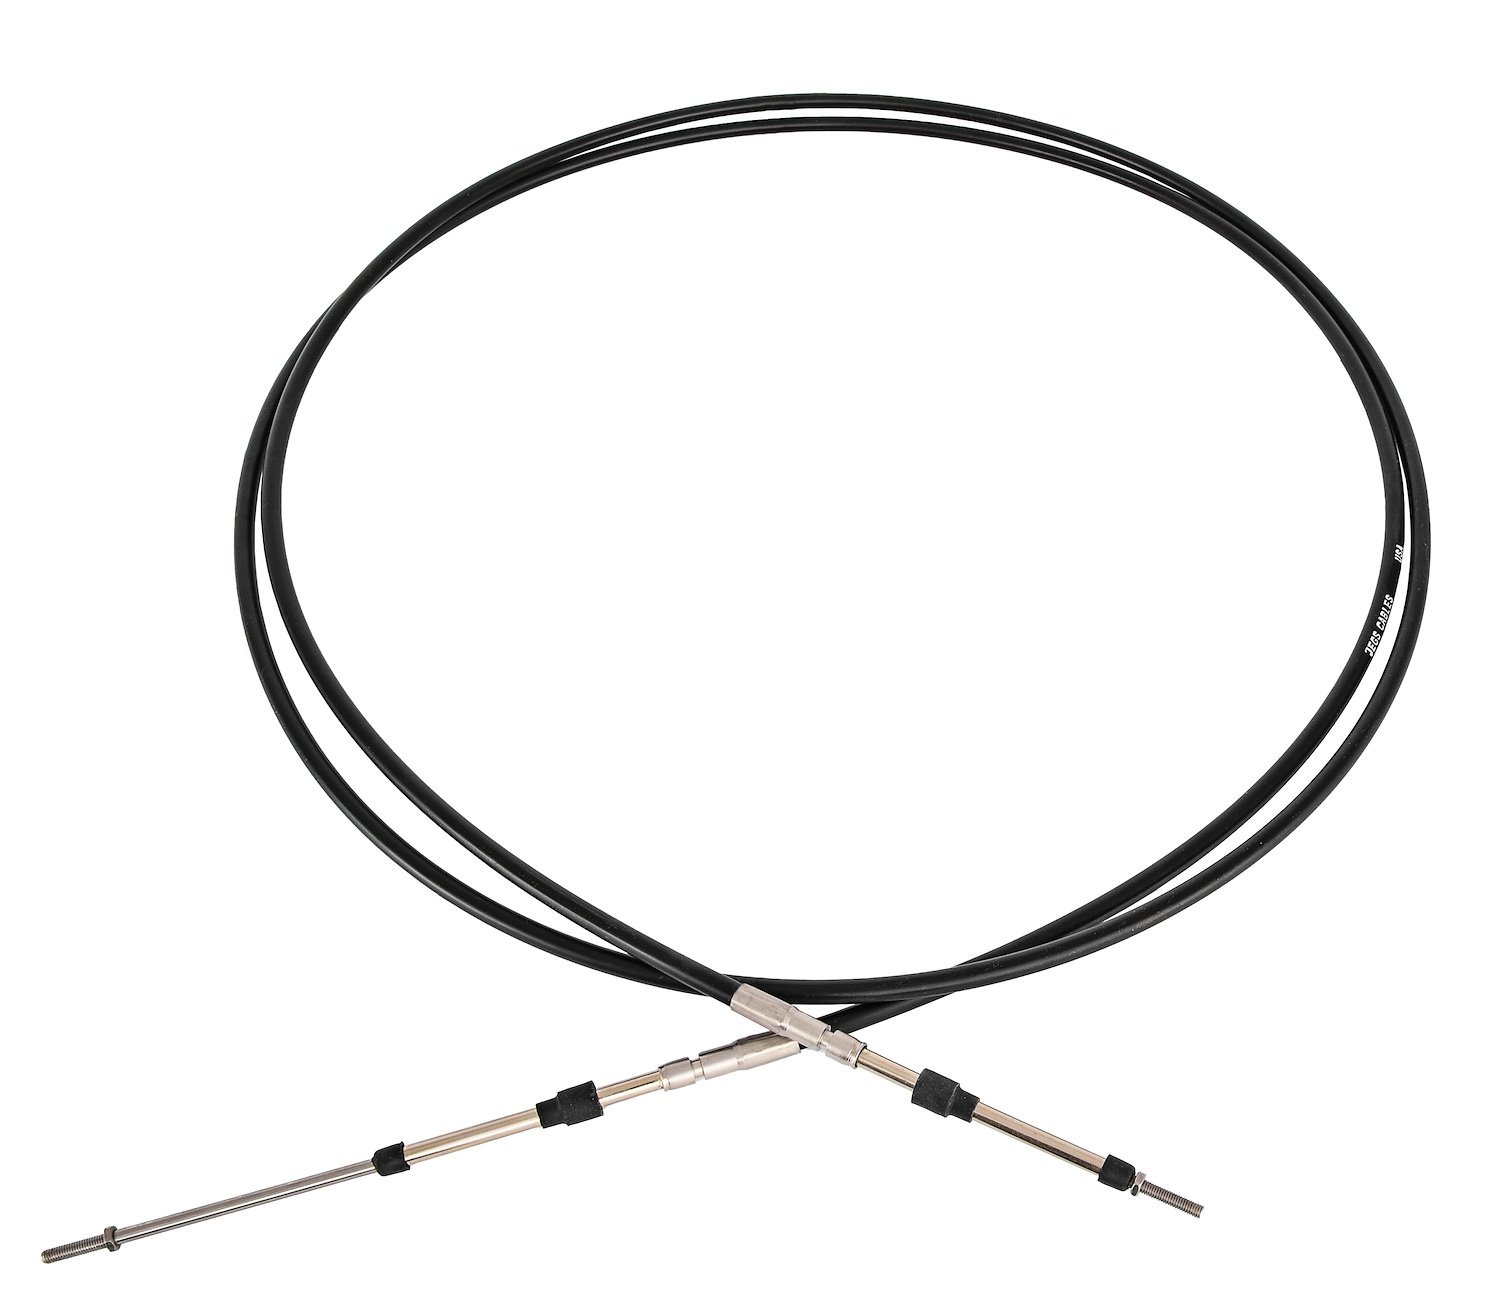 Morse Push/Pull Cable Length: 14 ft. Long